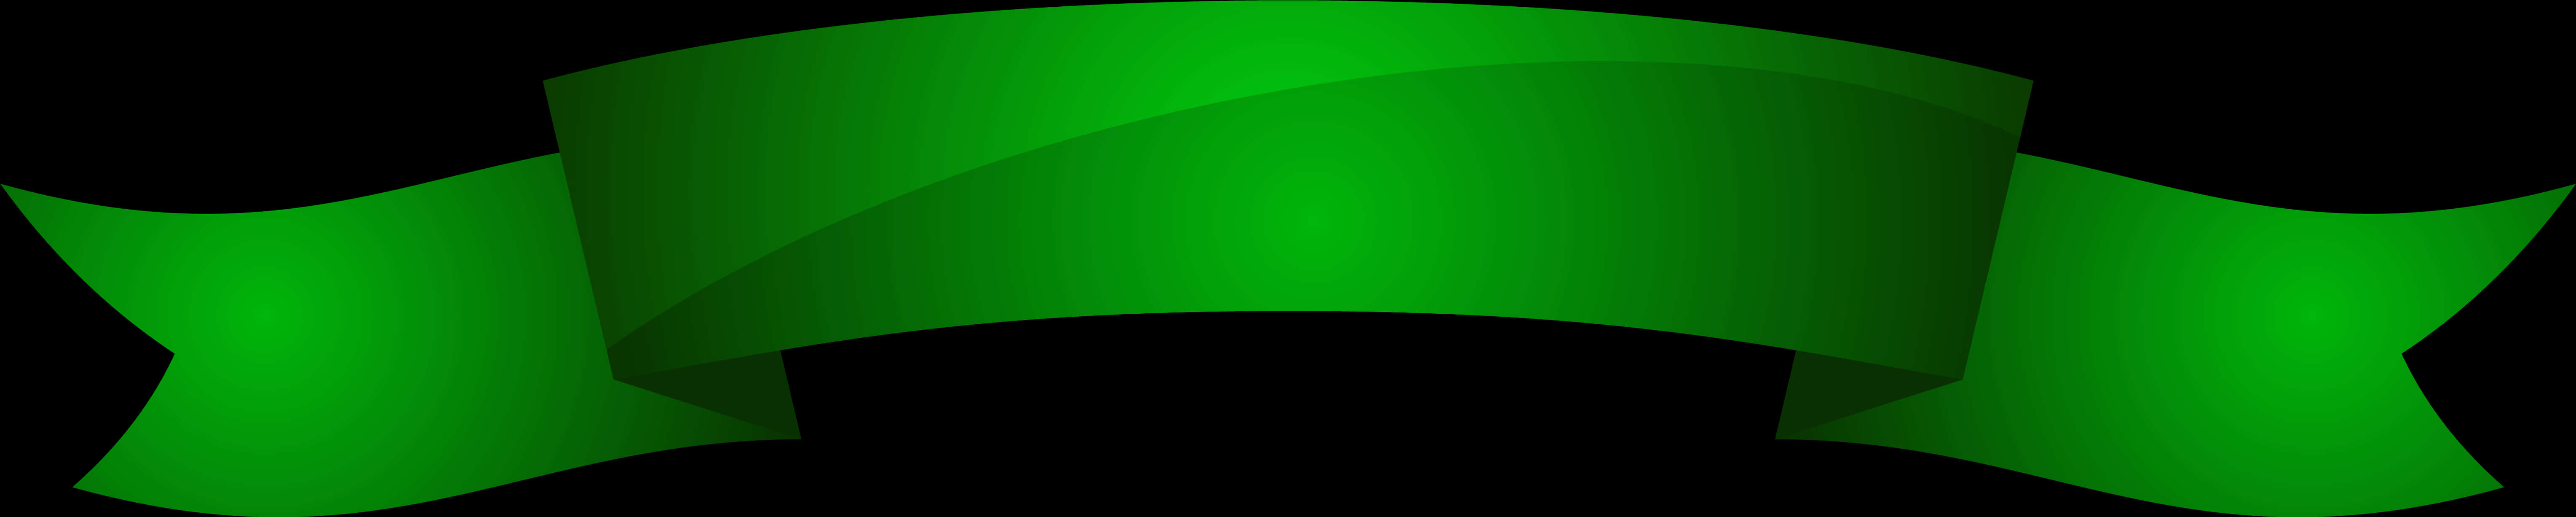 Banner Ribbon Green